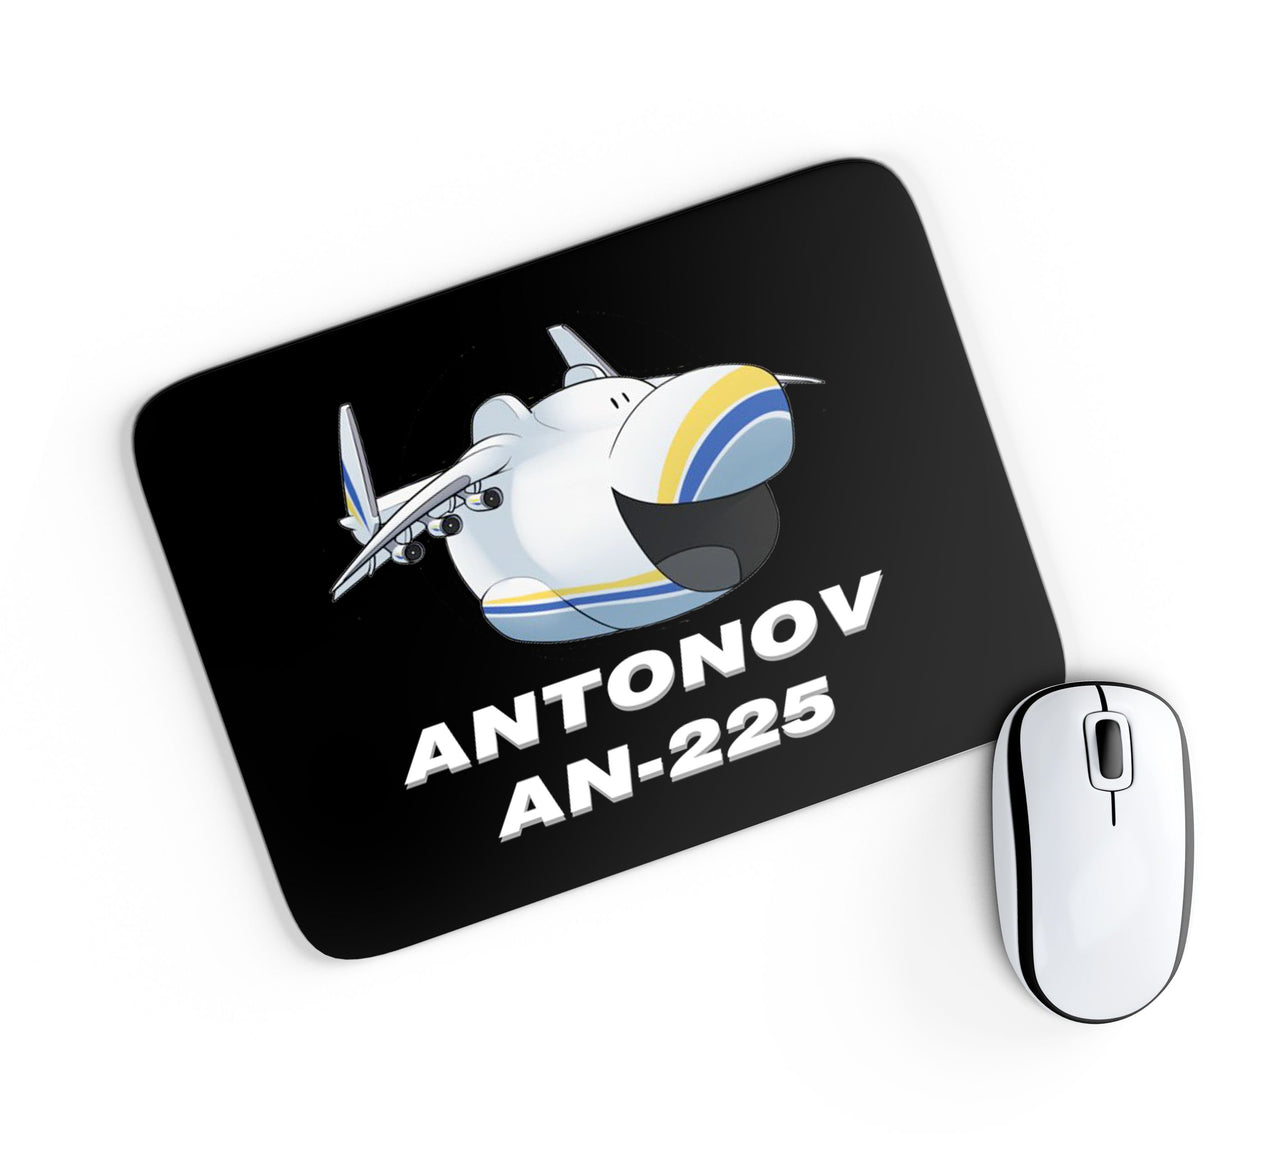 Antonov AN-225 (23) Designed Mouse Pads